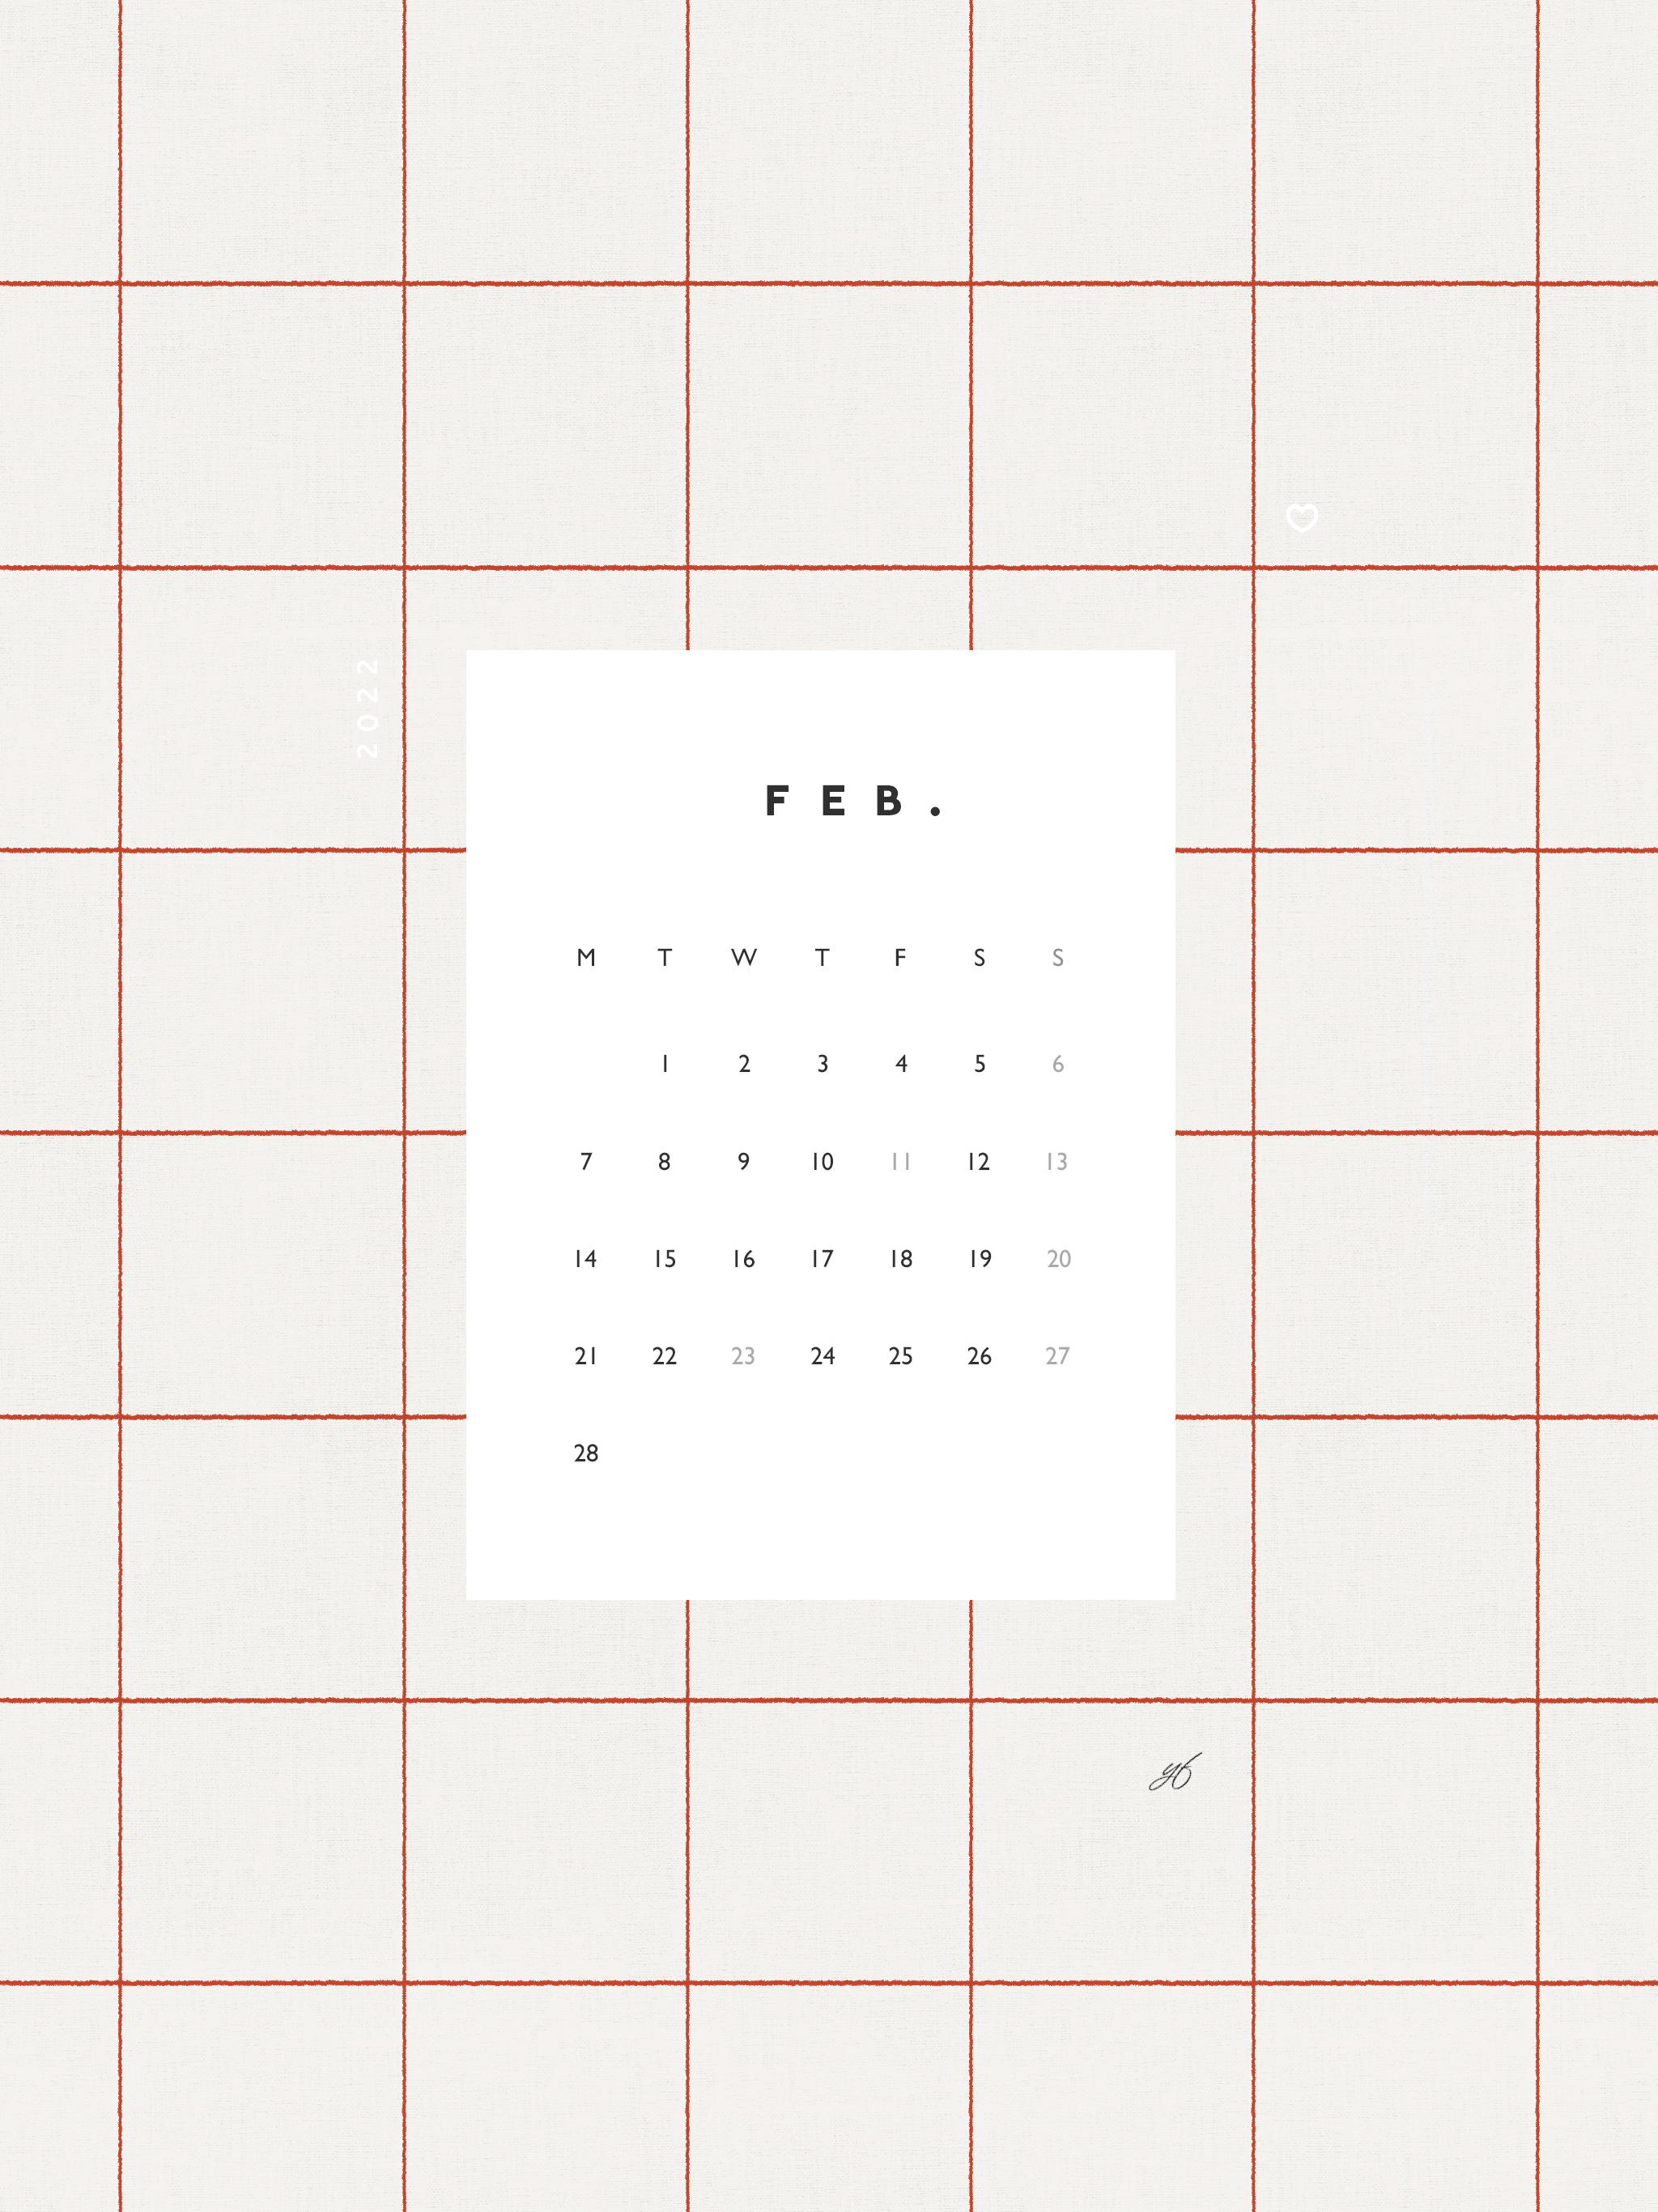 February 22 Calendar Wallpaper For The Ipad Design By Yf